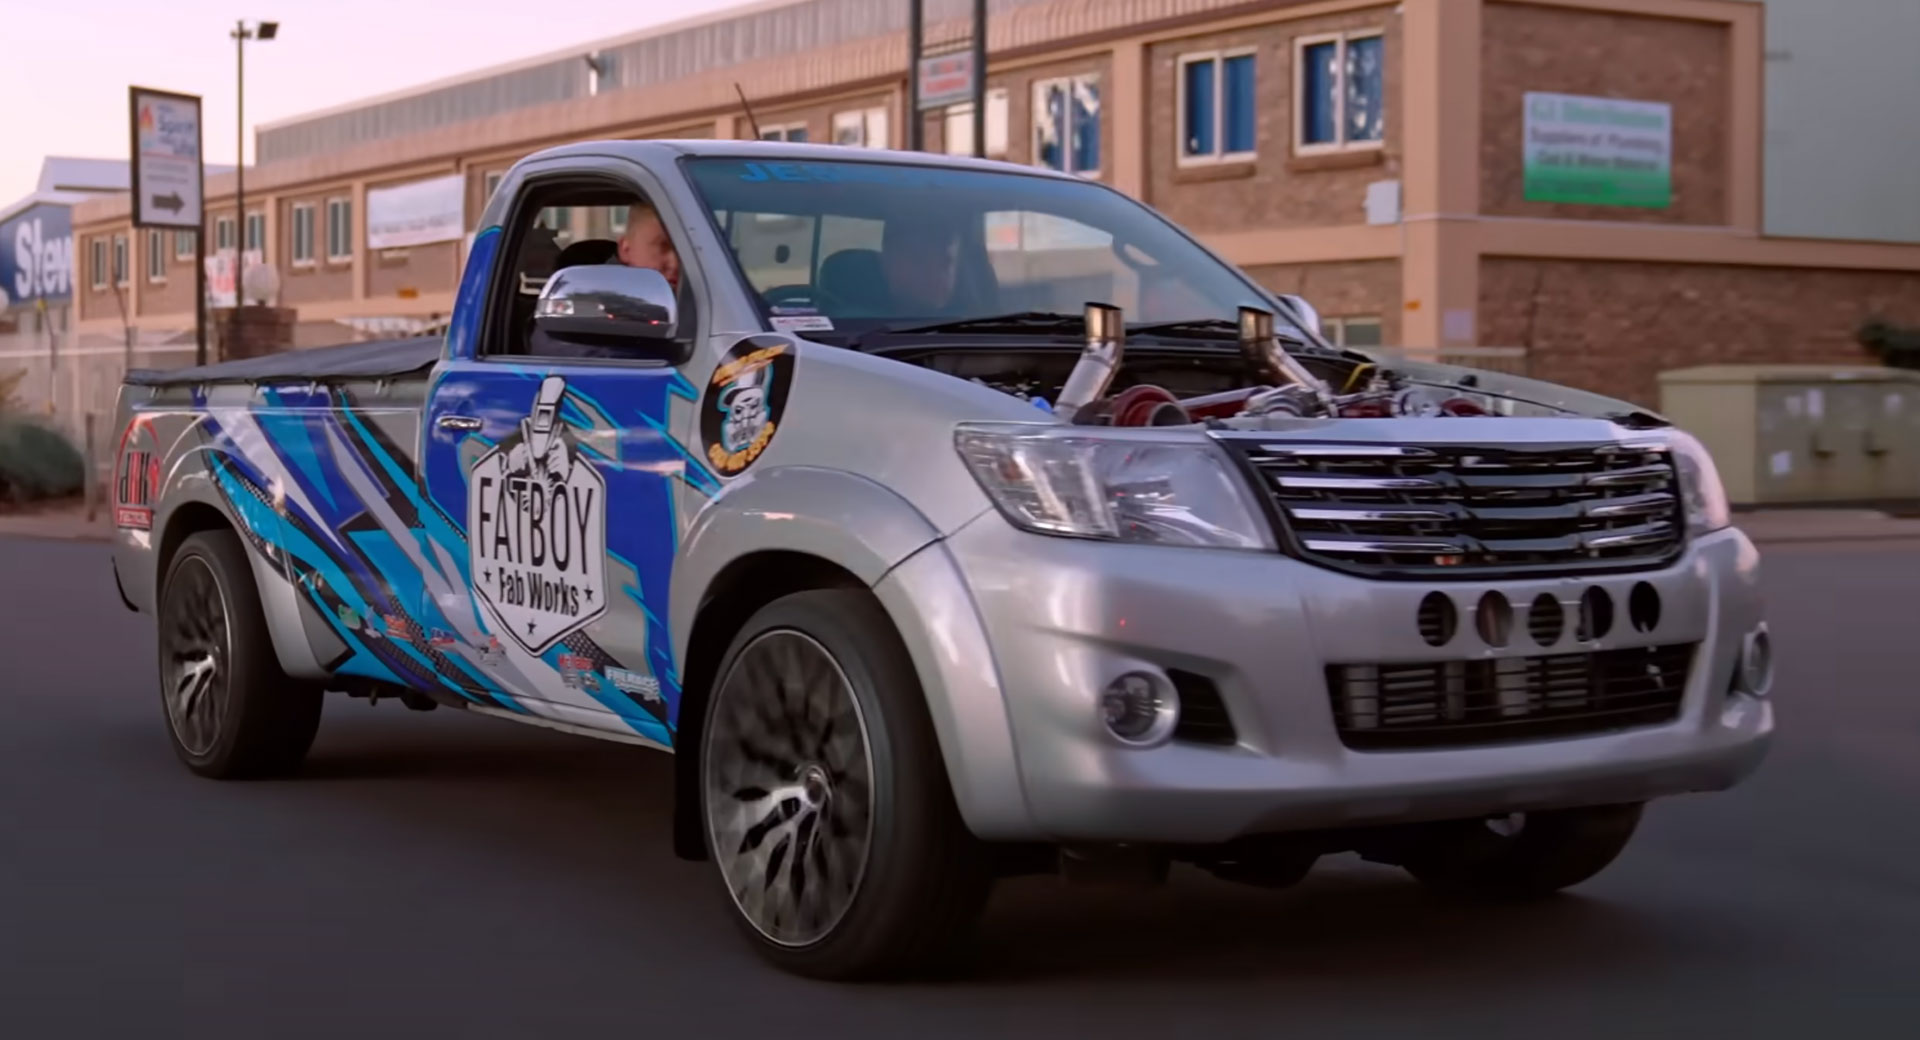 Ce sud-africain sauvage a créé un V12 biturbo Toyota Hilux